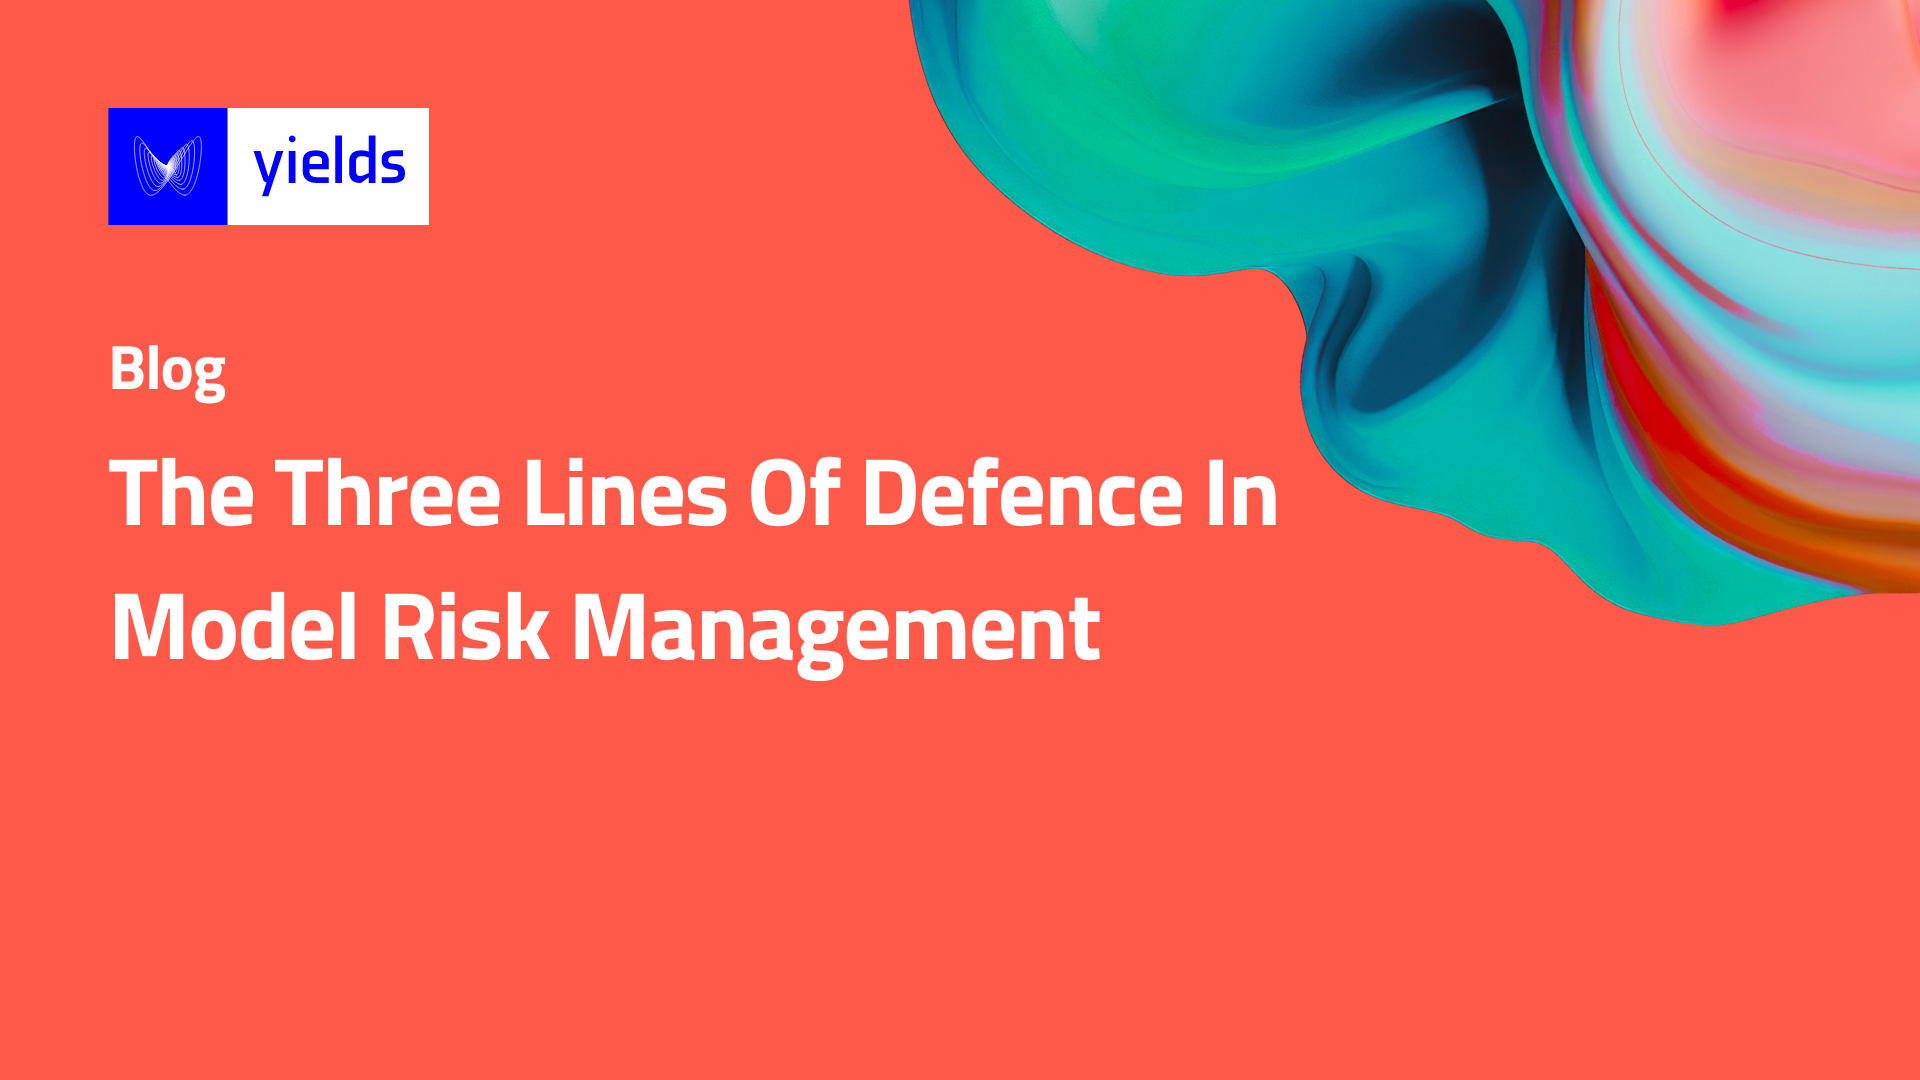 Applying the 3 Lines of Defense Framework to Model Risk Management